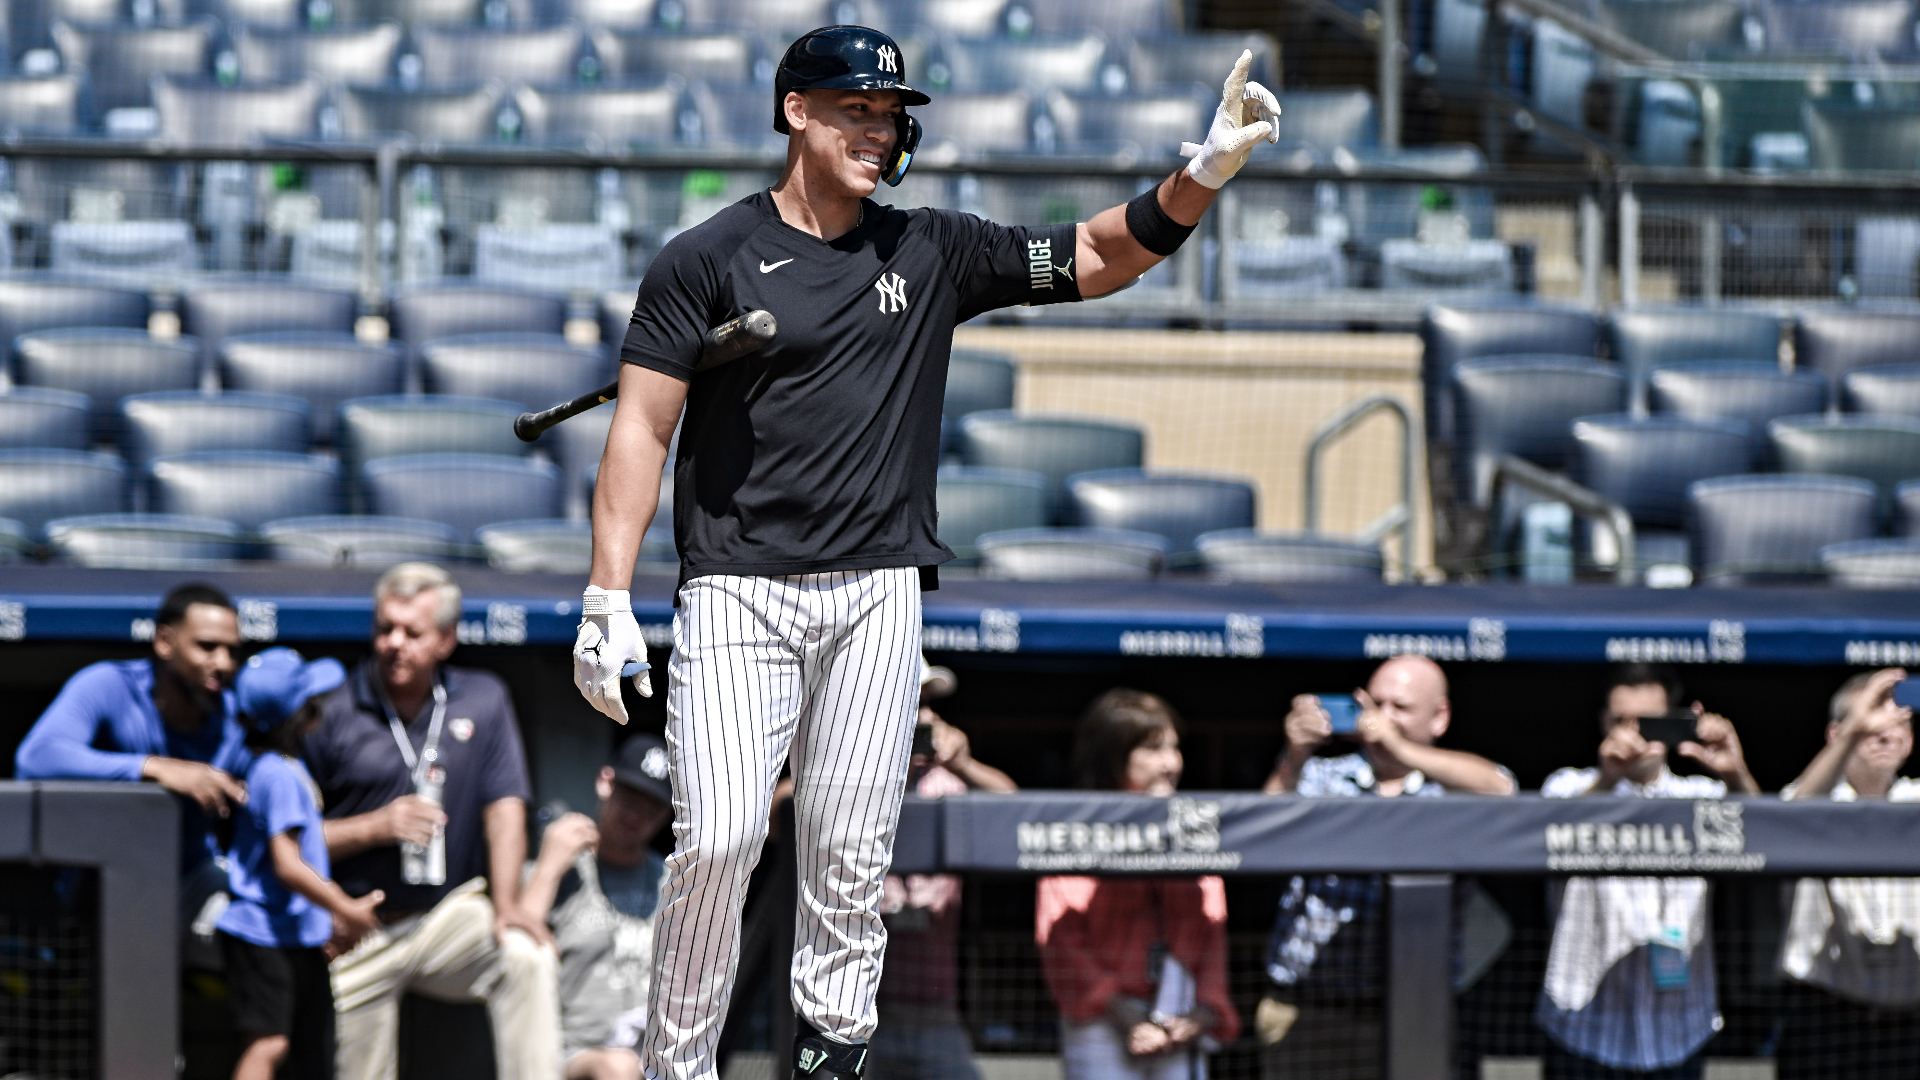 Yankees reinstate Aaron Judge from injured list